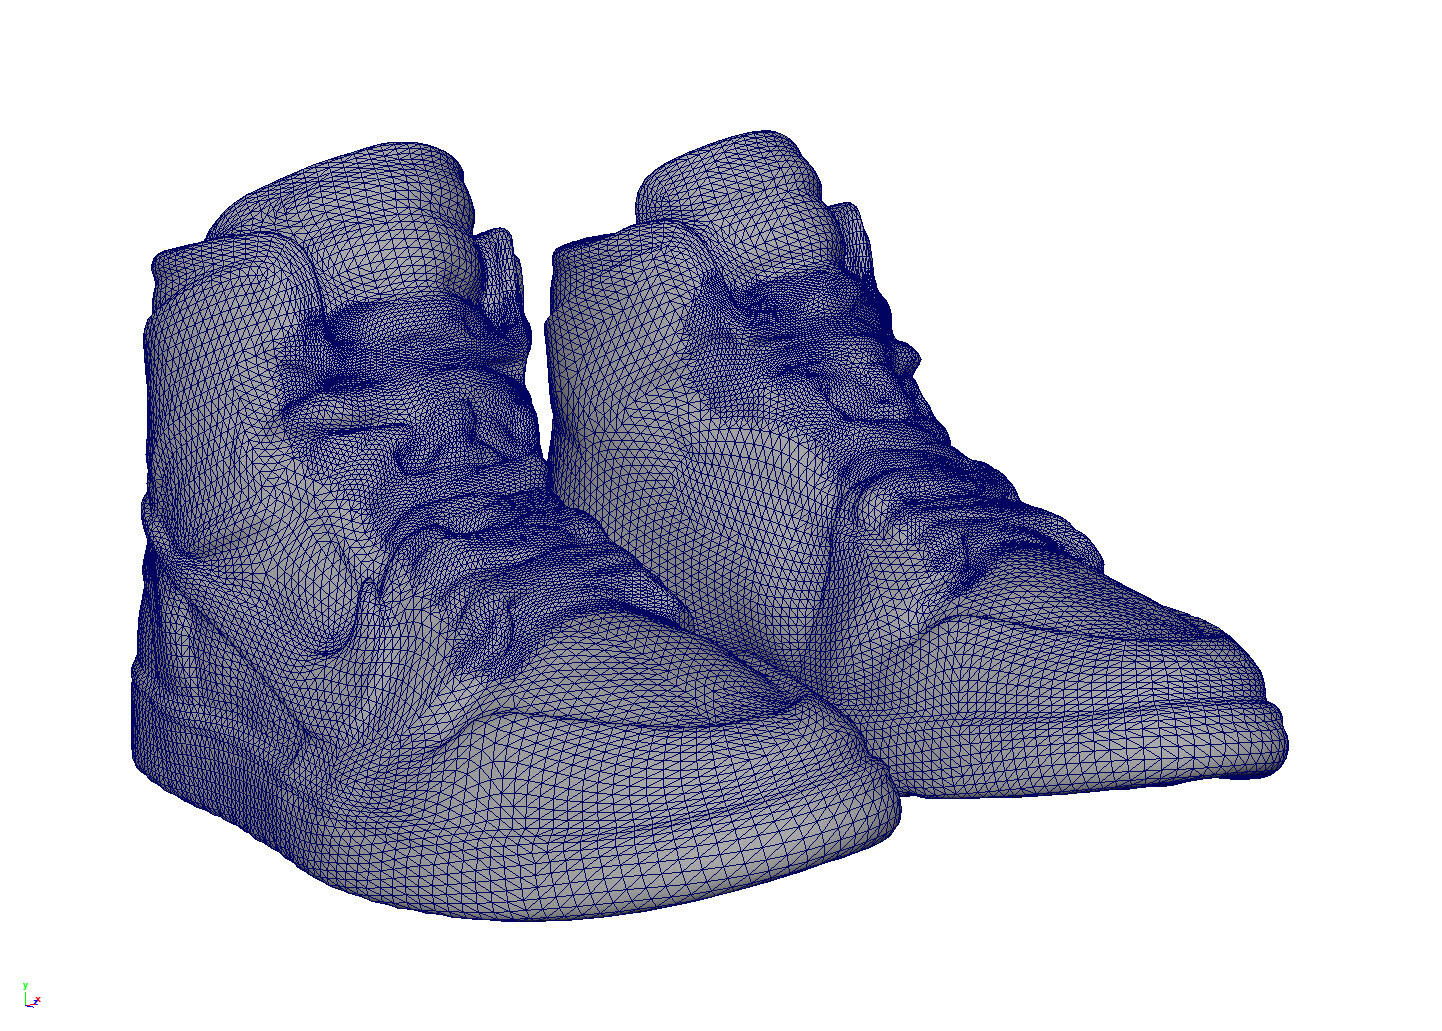 ArtStation - Louis Vuitton x Nike Air Jordan 1 Retro High footwear shoes  streetwear character clothing